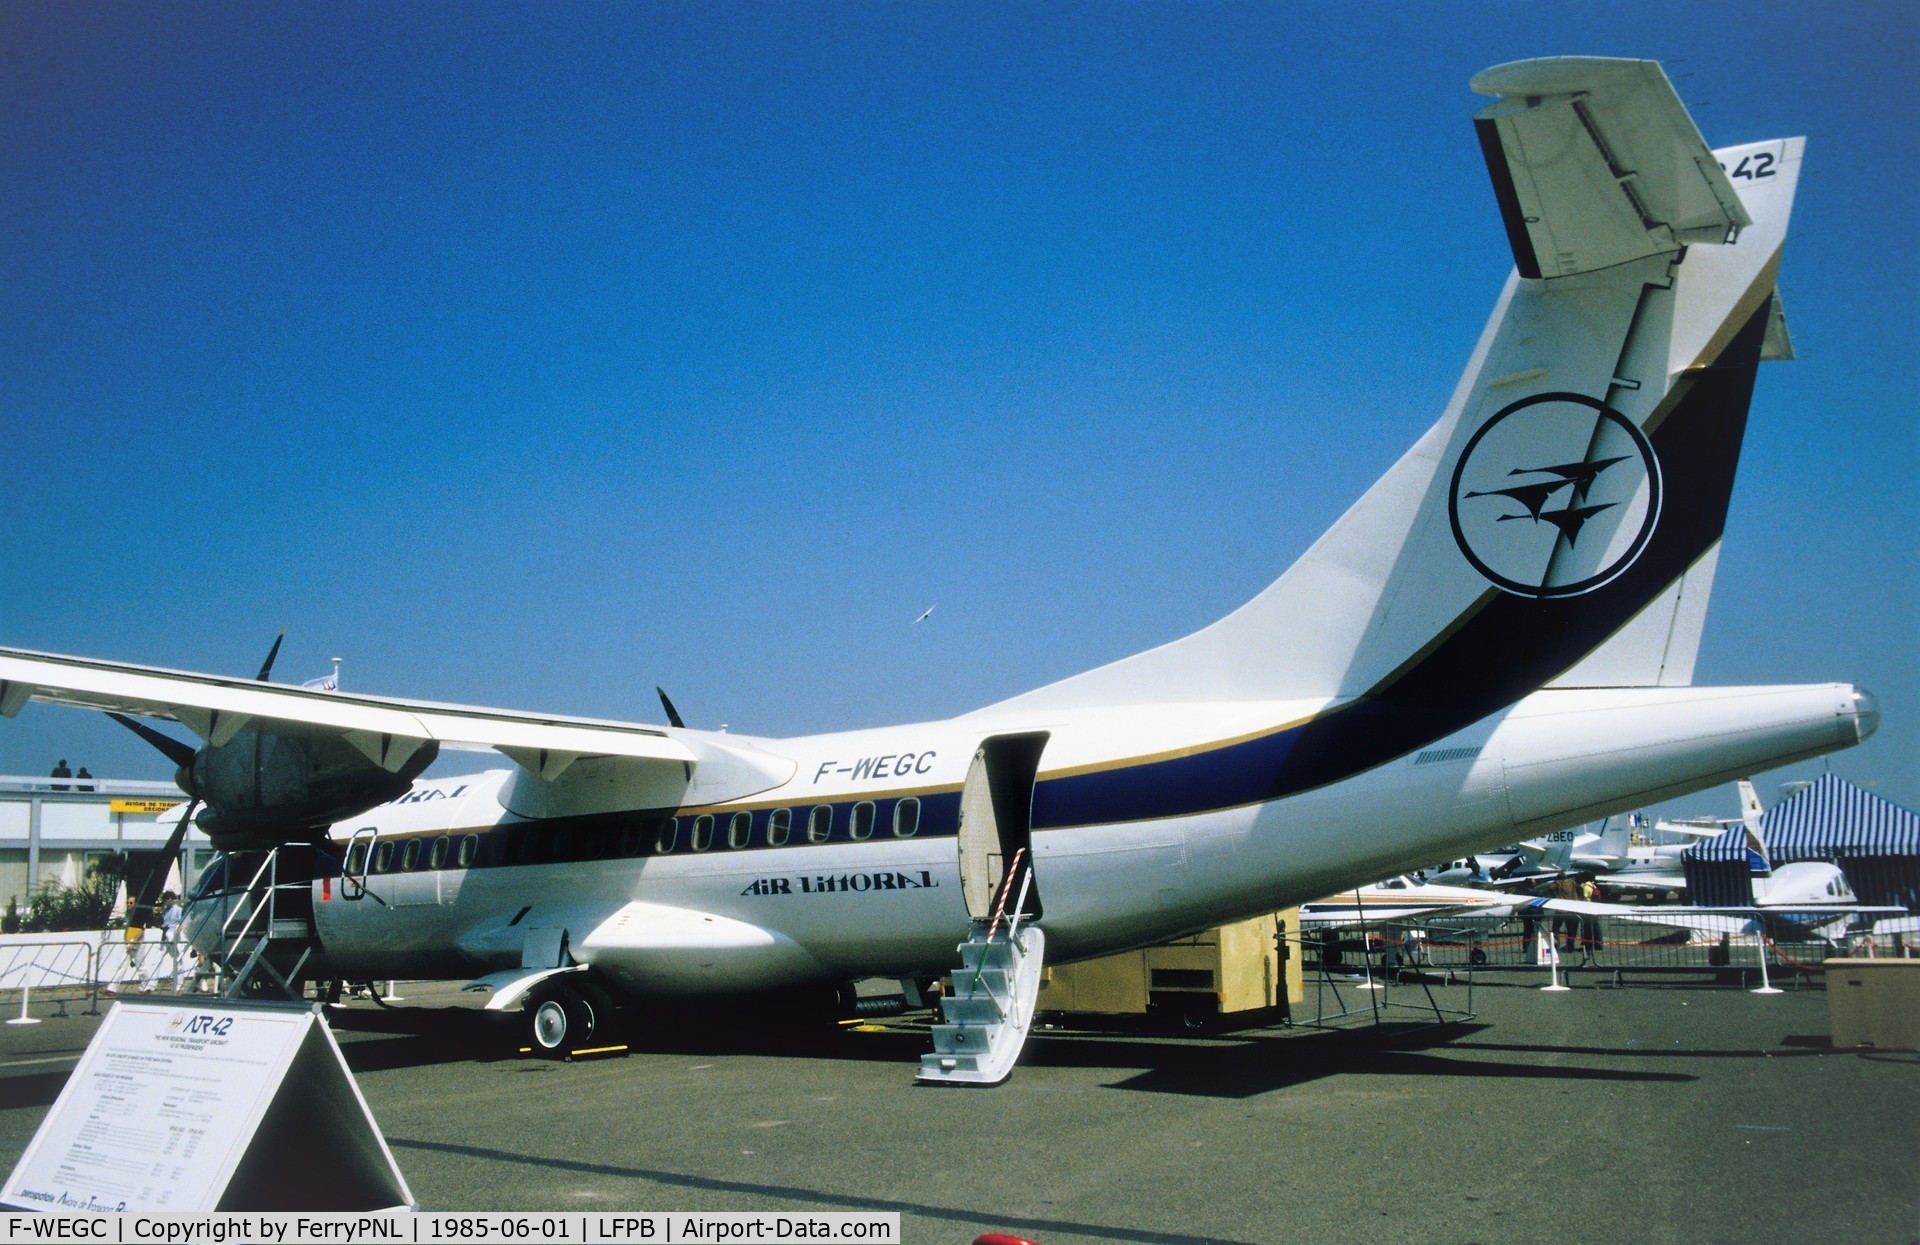 F-WEGC, 1985 ATR 42-320 C/N 003, ATR demonstrating its 